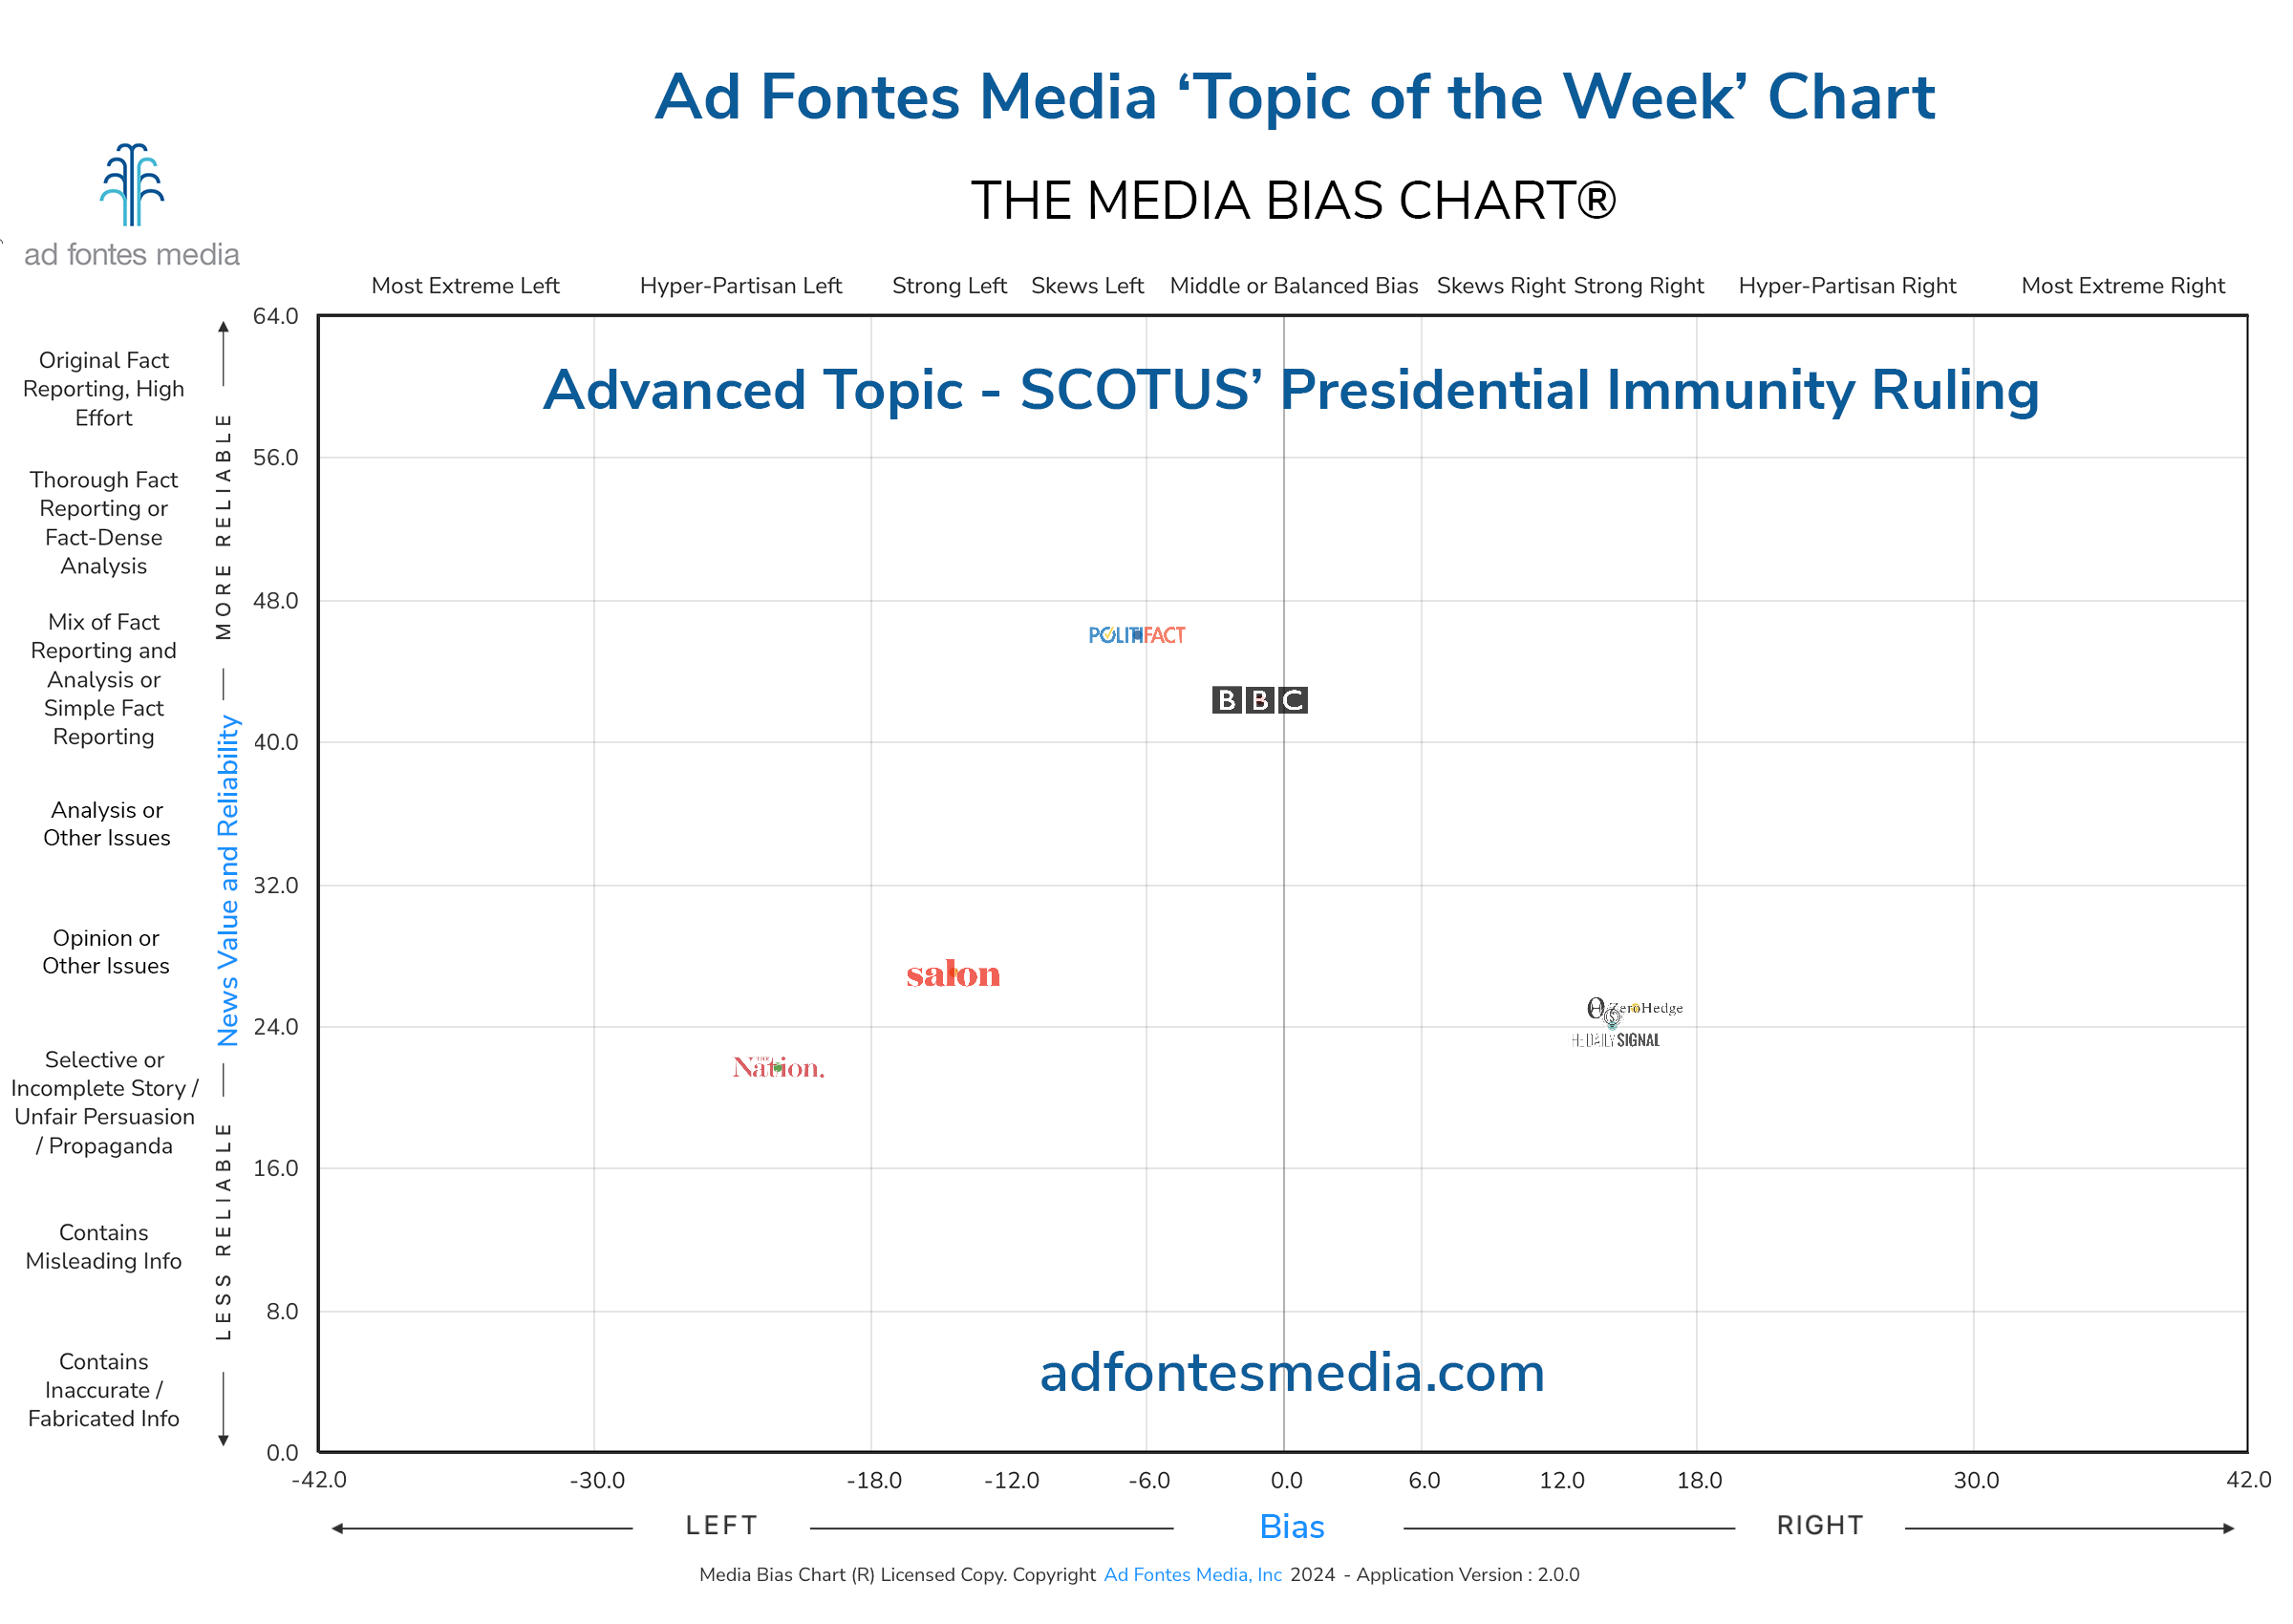 Media Bias Chart examines media coverage of the SCOTUS ruling on presidential immunity